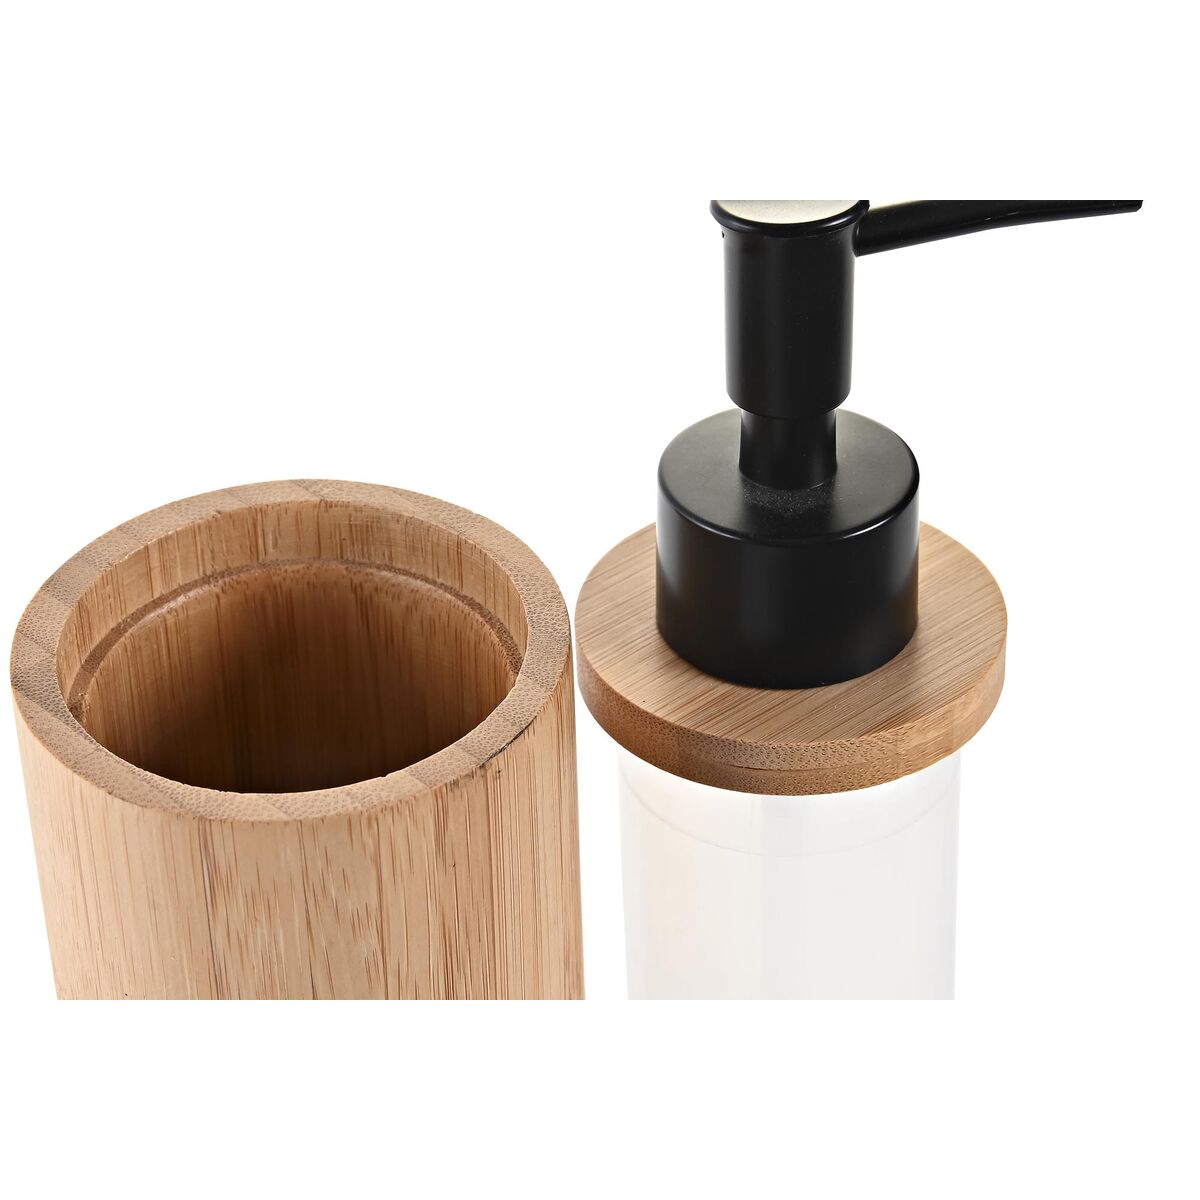 Natural bamboo & black soap dispenser